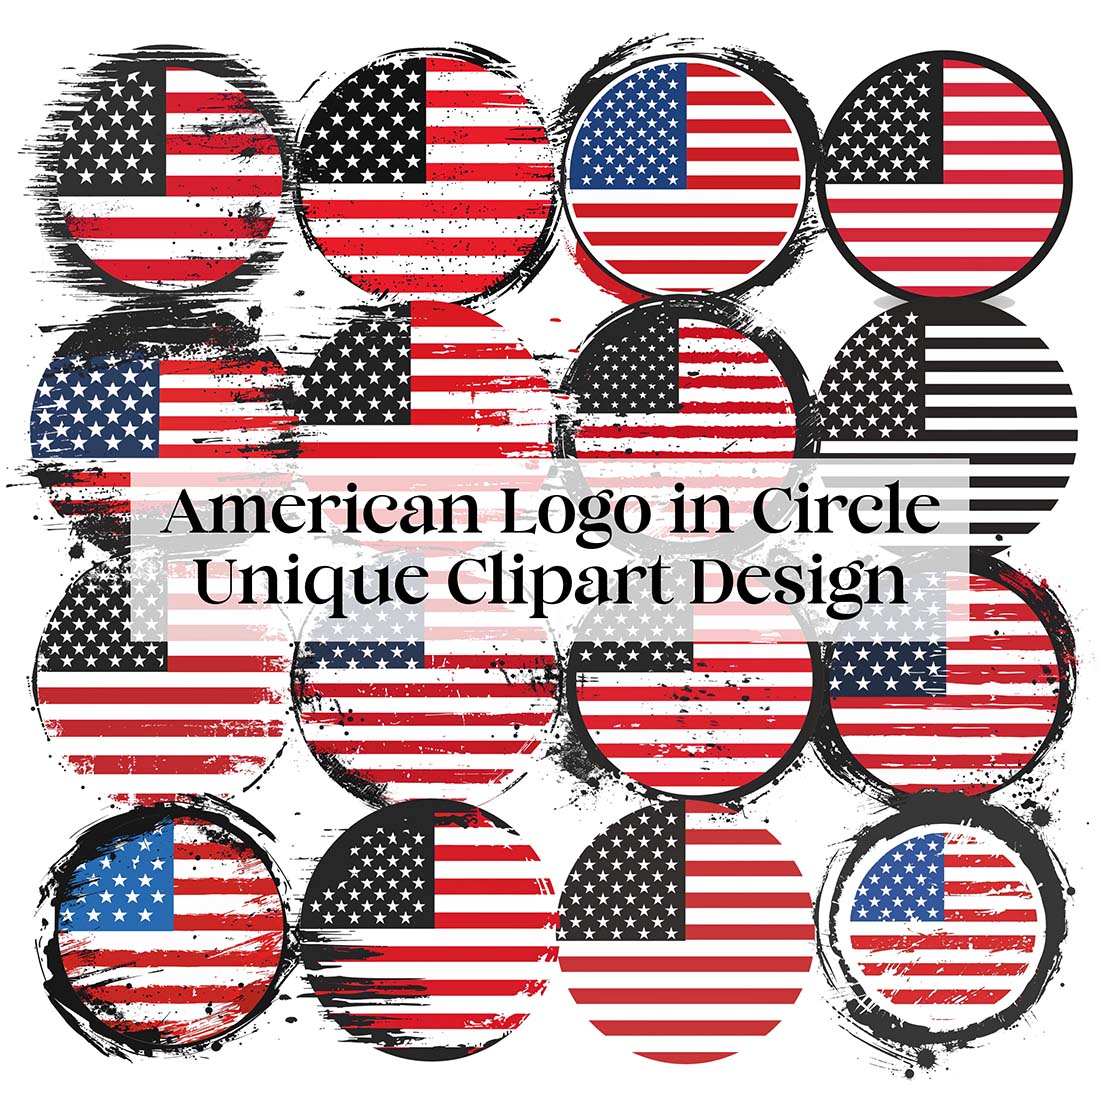 American Logo in Circle Unique Clipart Design cover image.